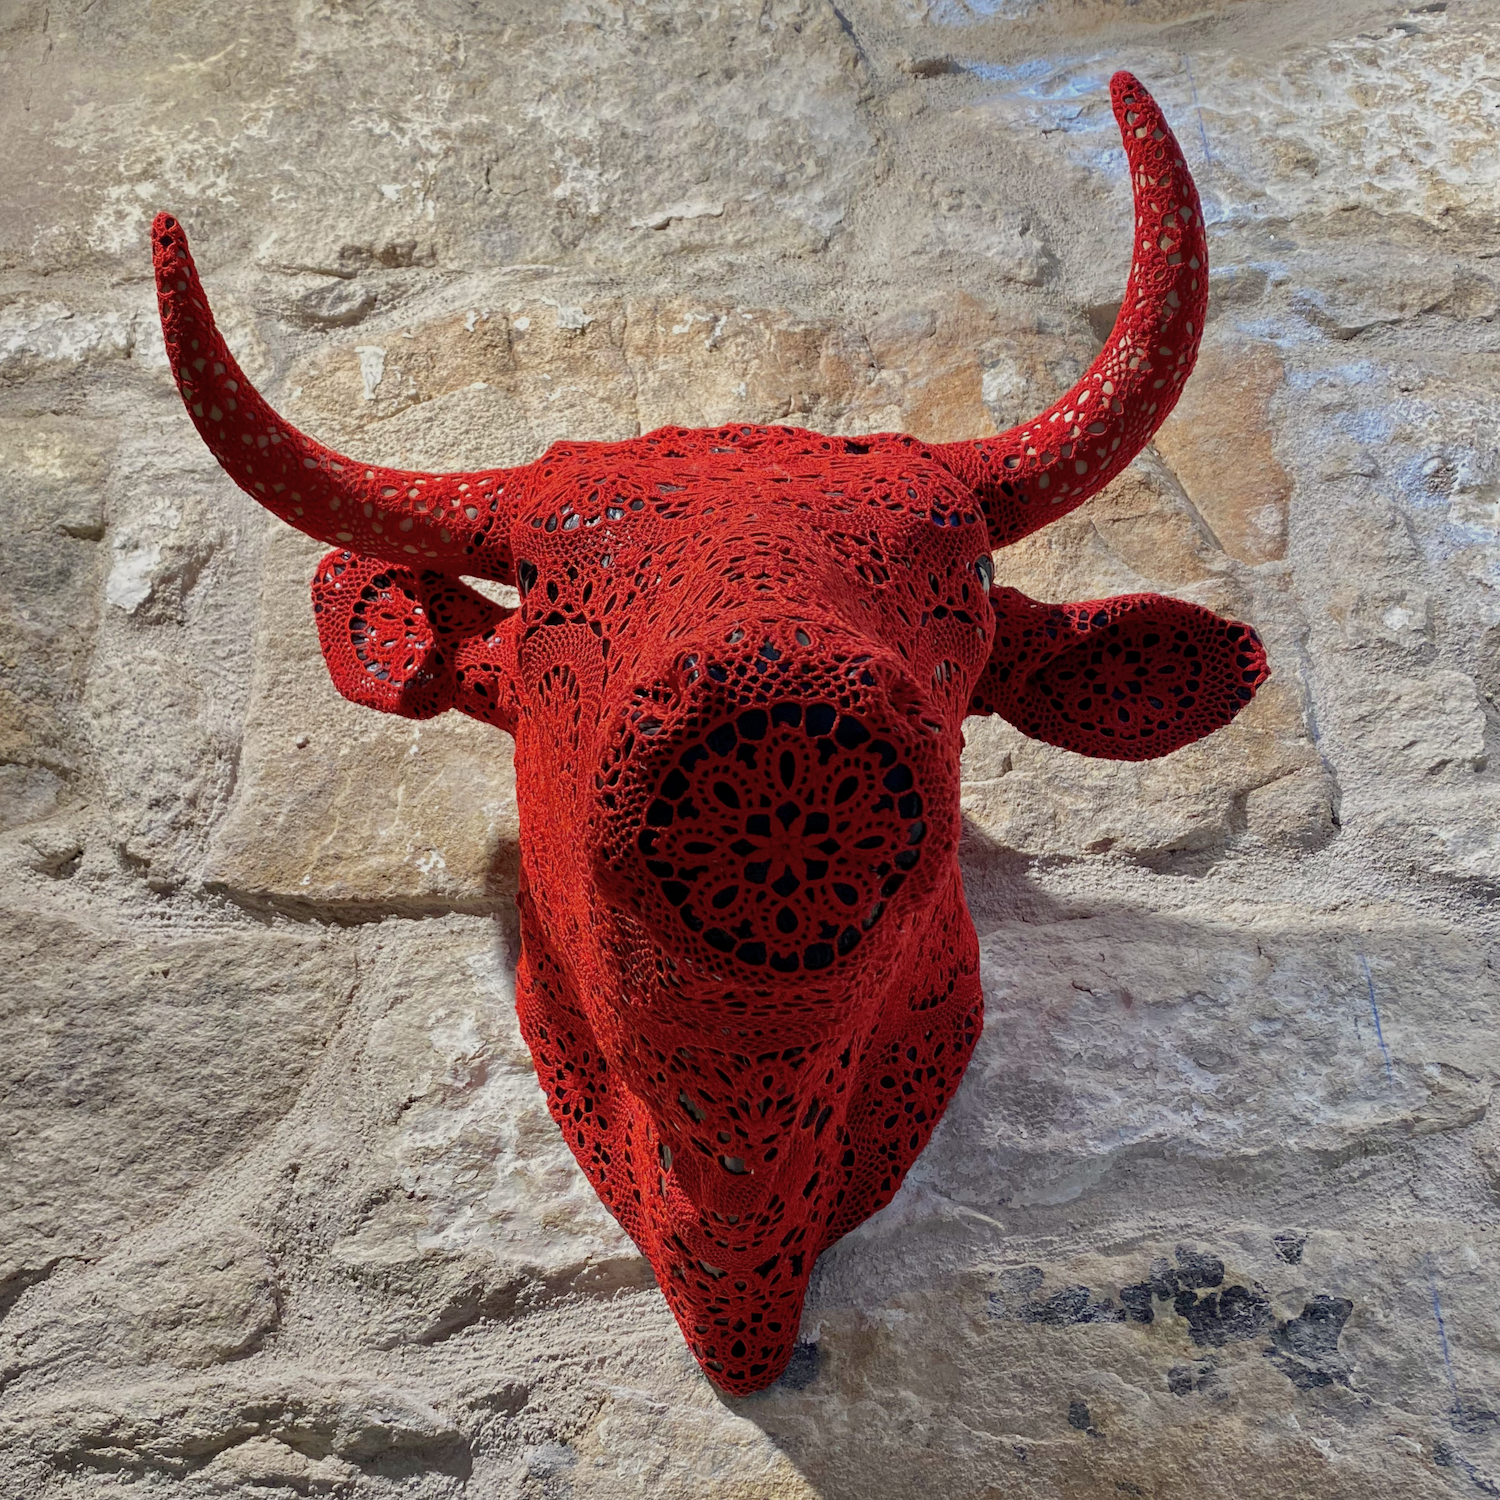 Portugal's proud bull dressed in crochet!